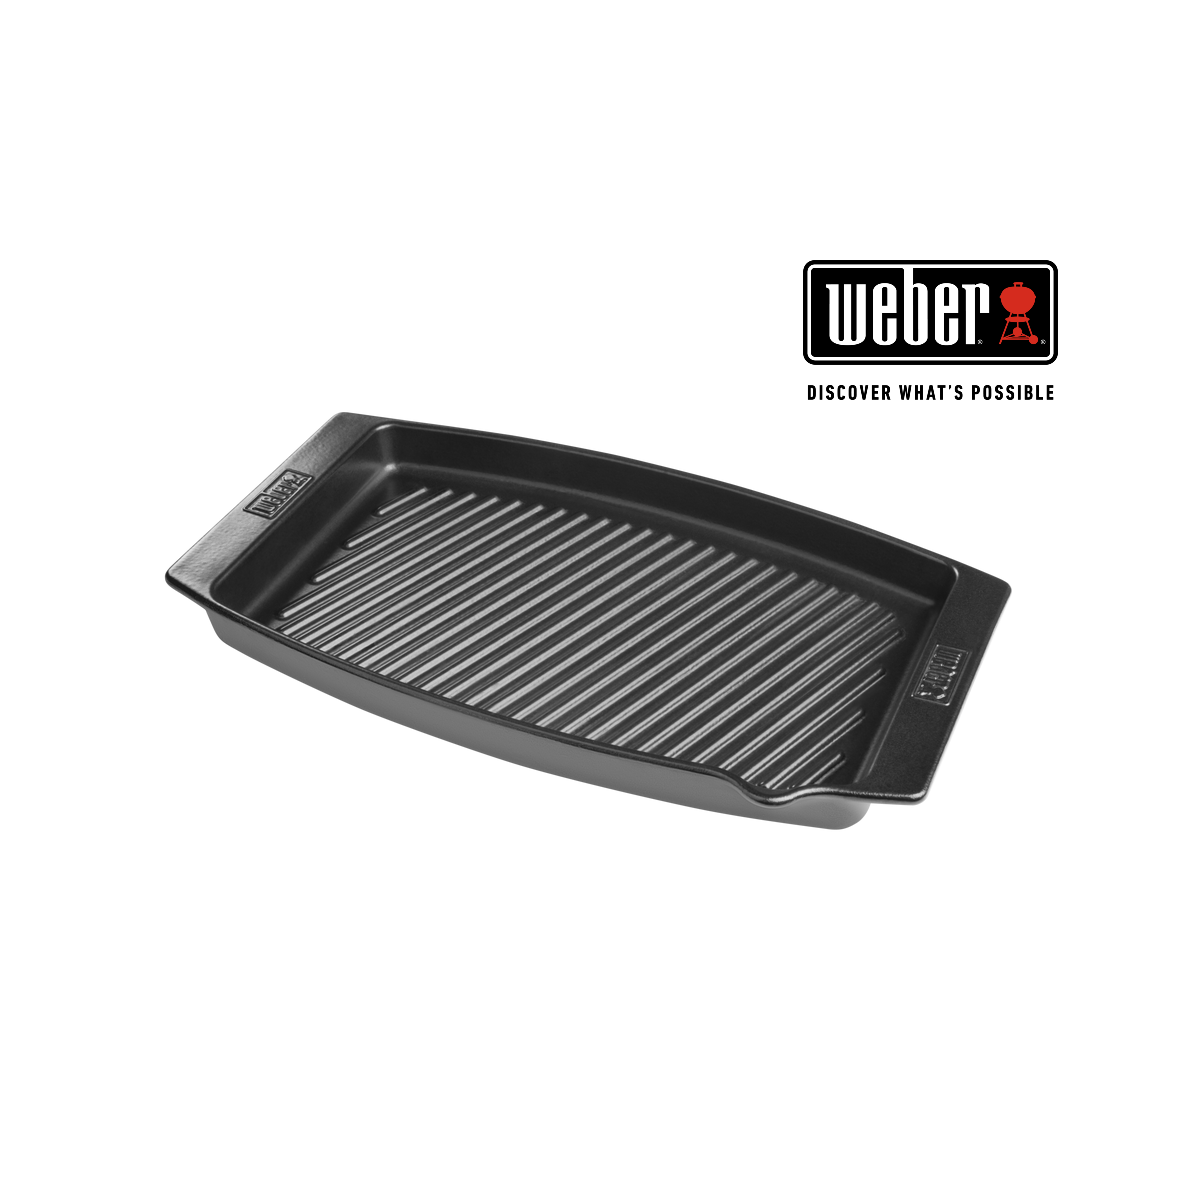 WEBER ceramic grill pan 47x28cm 17886